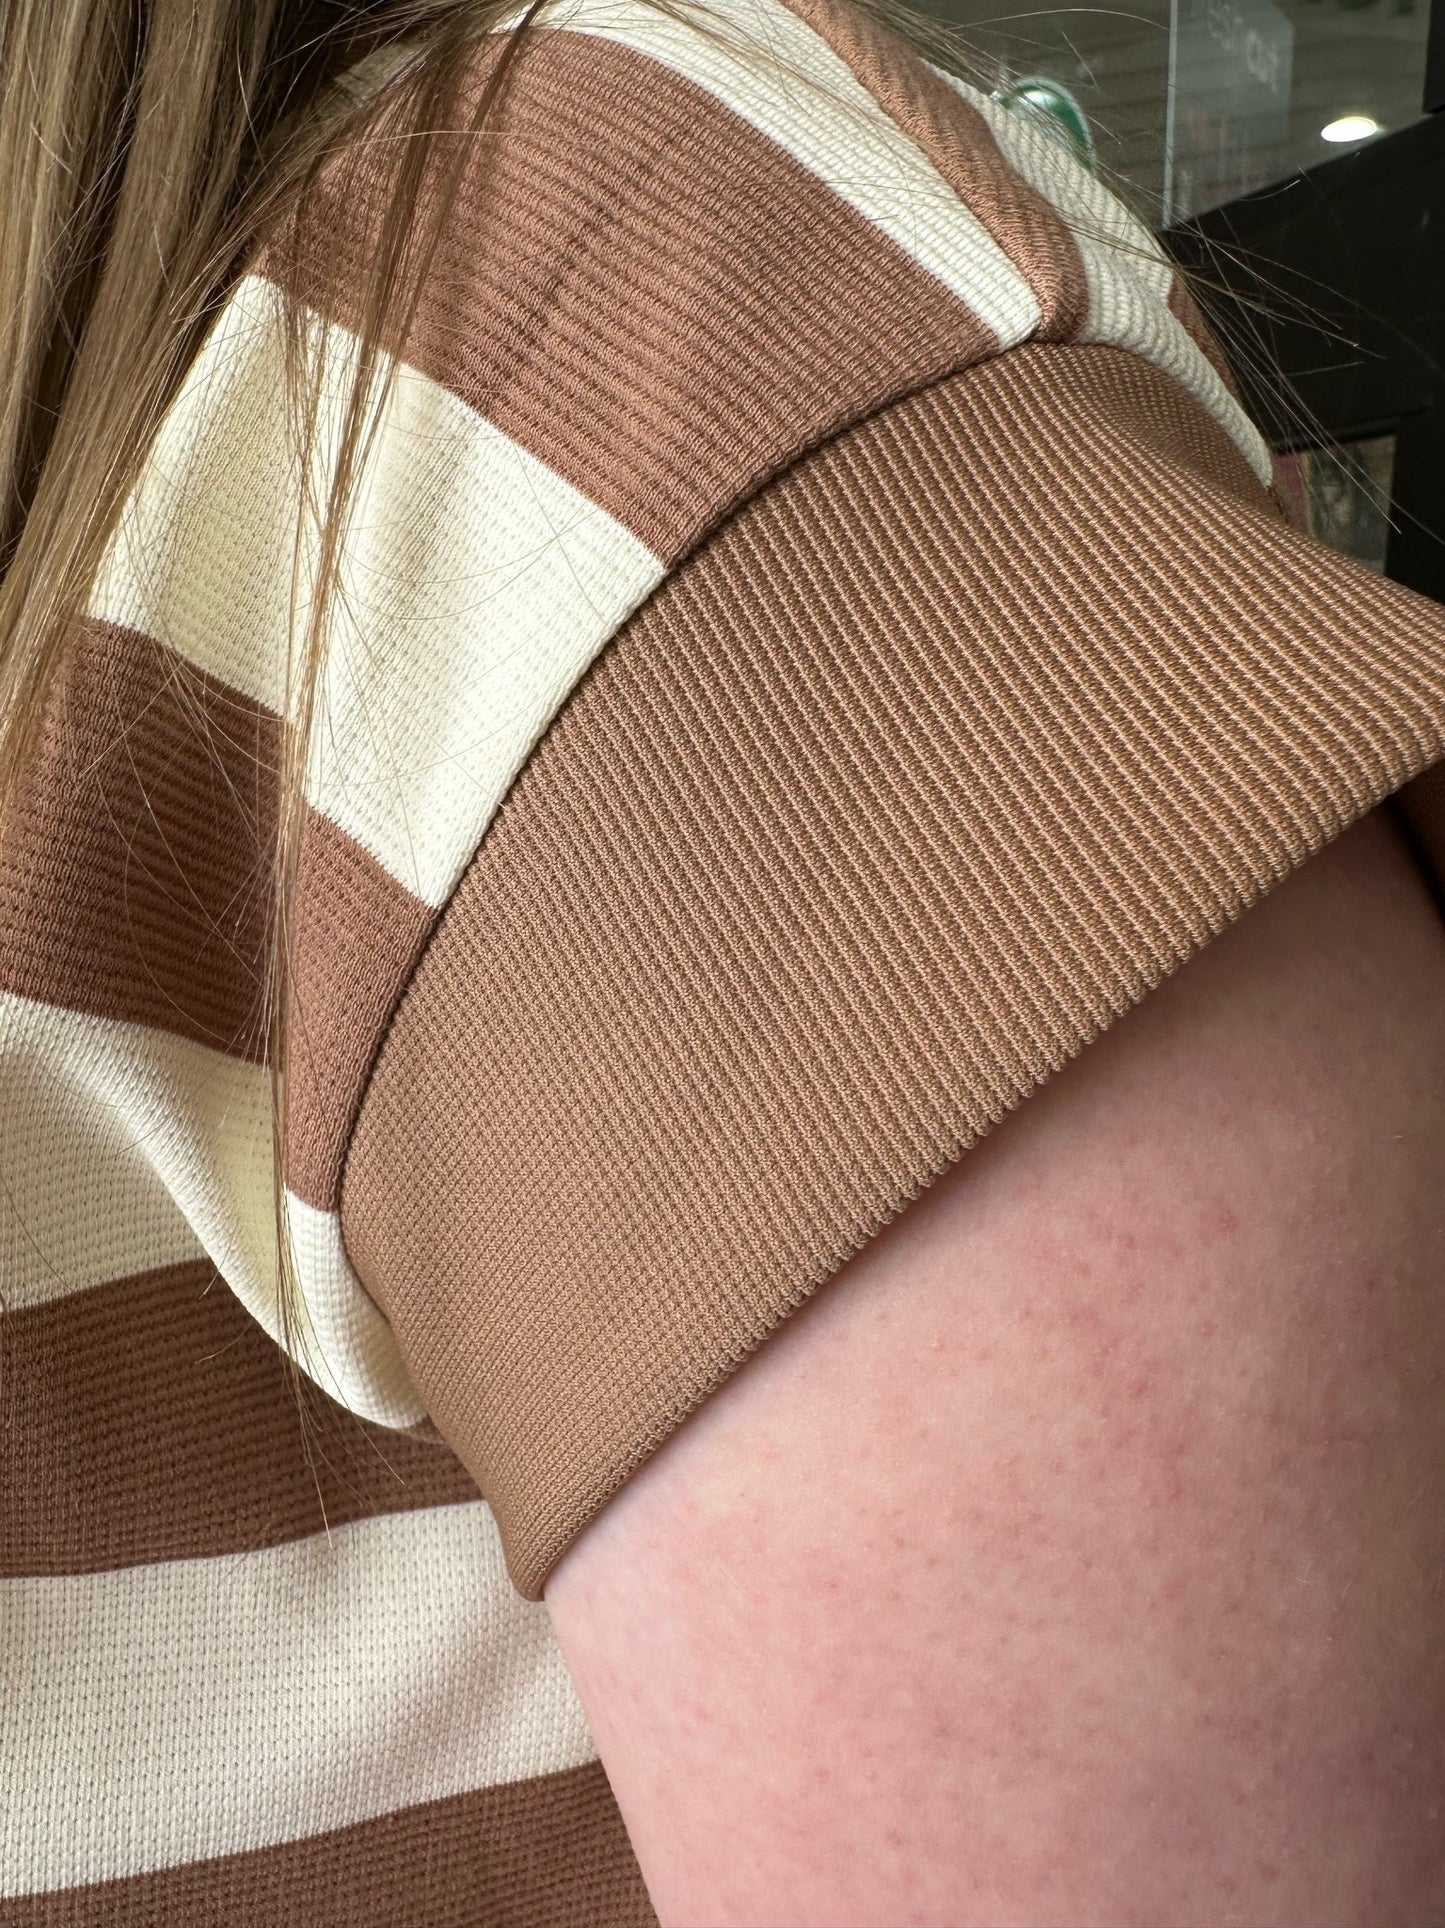 Tan & White Striped Shoulder Sleeve Dress